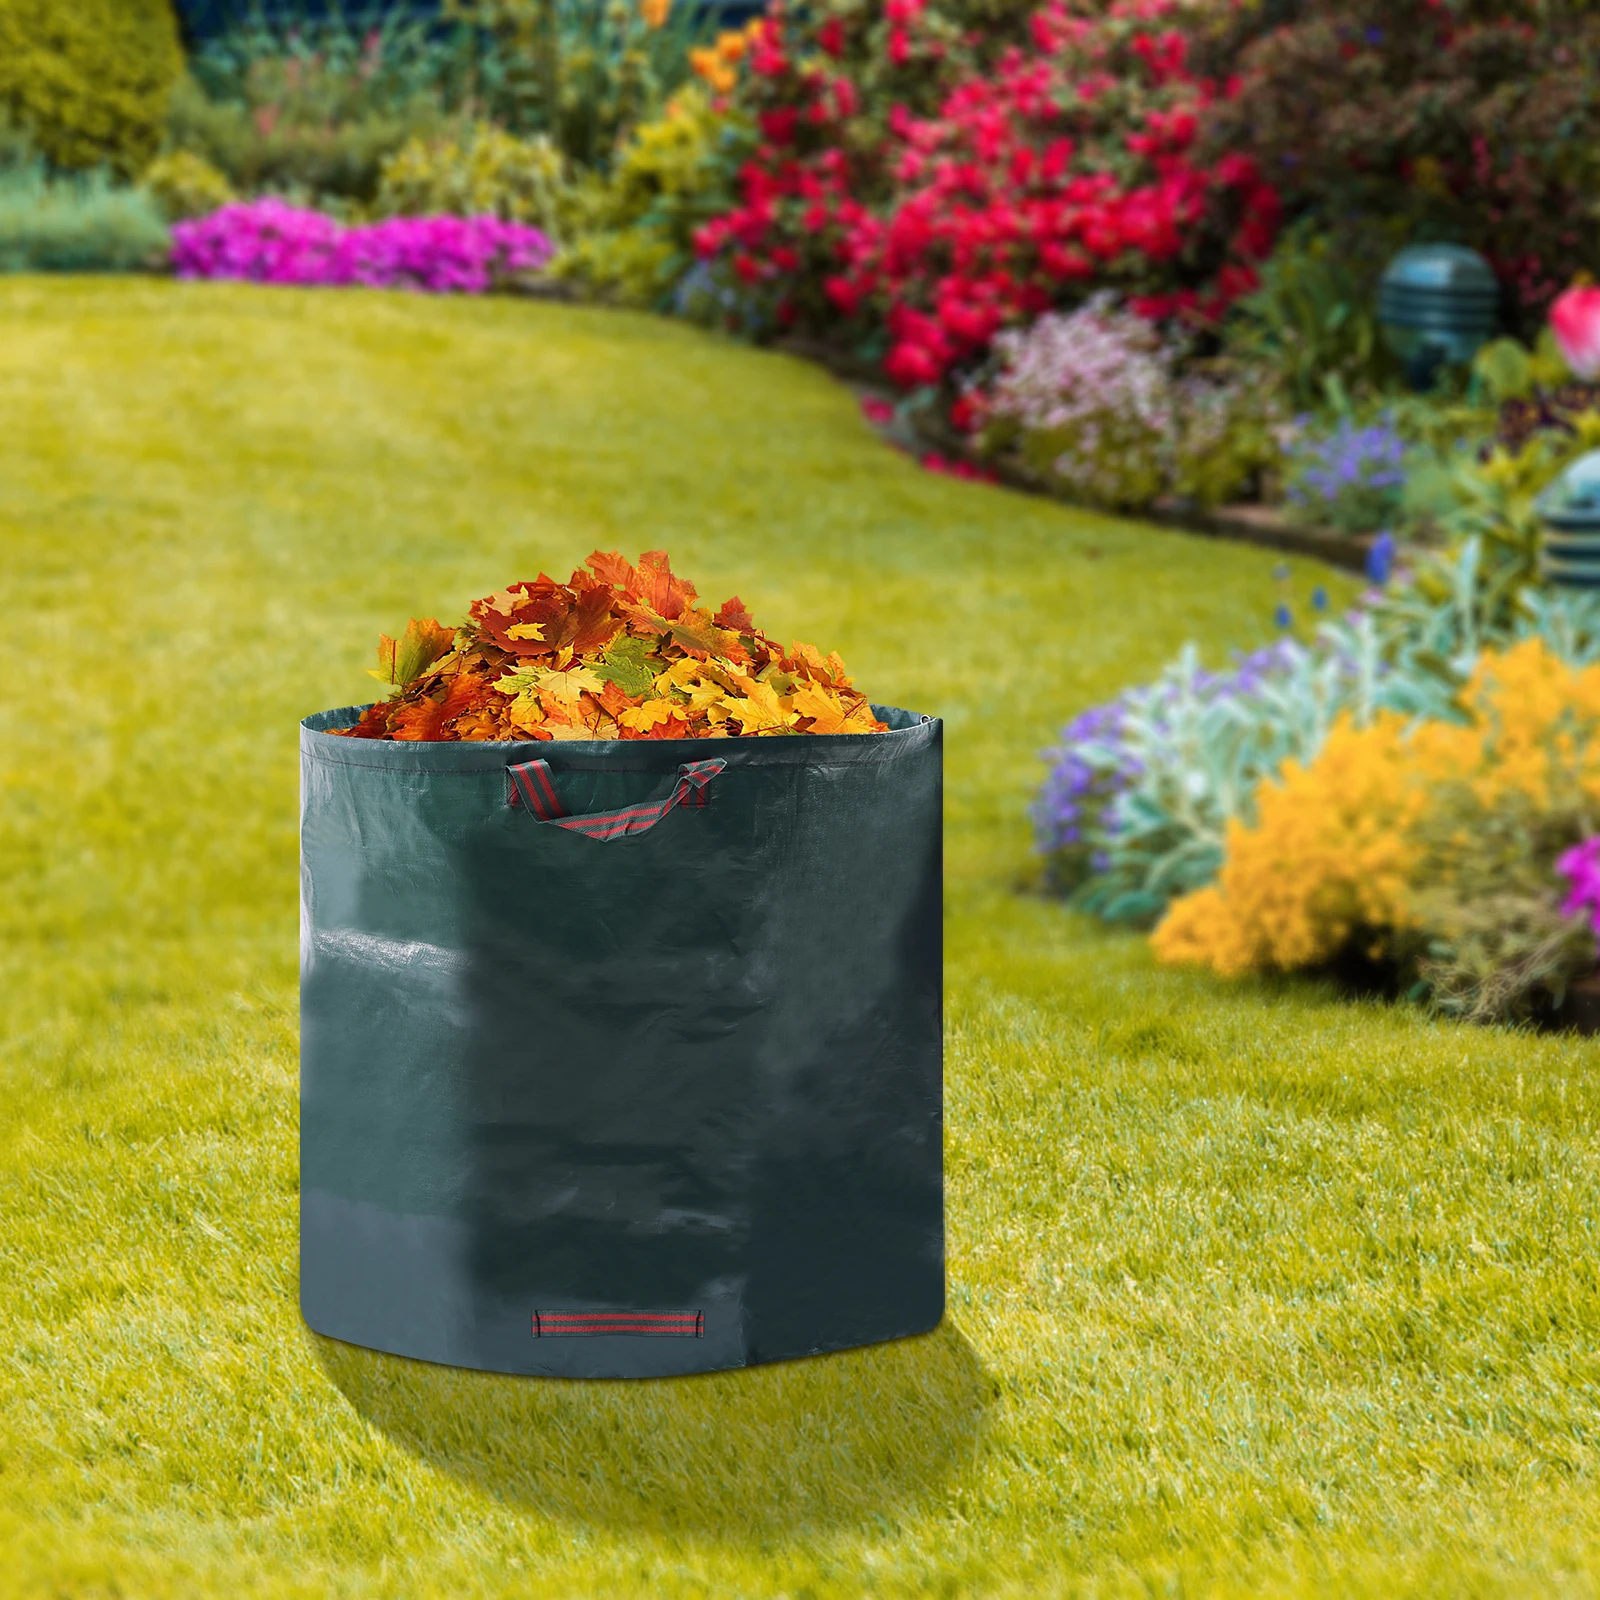 https://ae01.alicdn.com/kf/S836f3445932045dcbba1bb830e9e178fq/80-106-132-Gallons-Lawn-Garden-Yard-Leaf-Waste-Bags-Reusable-For-Storage-Bag-Patio-Bag.jpg